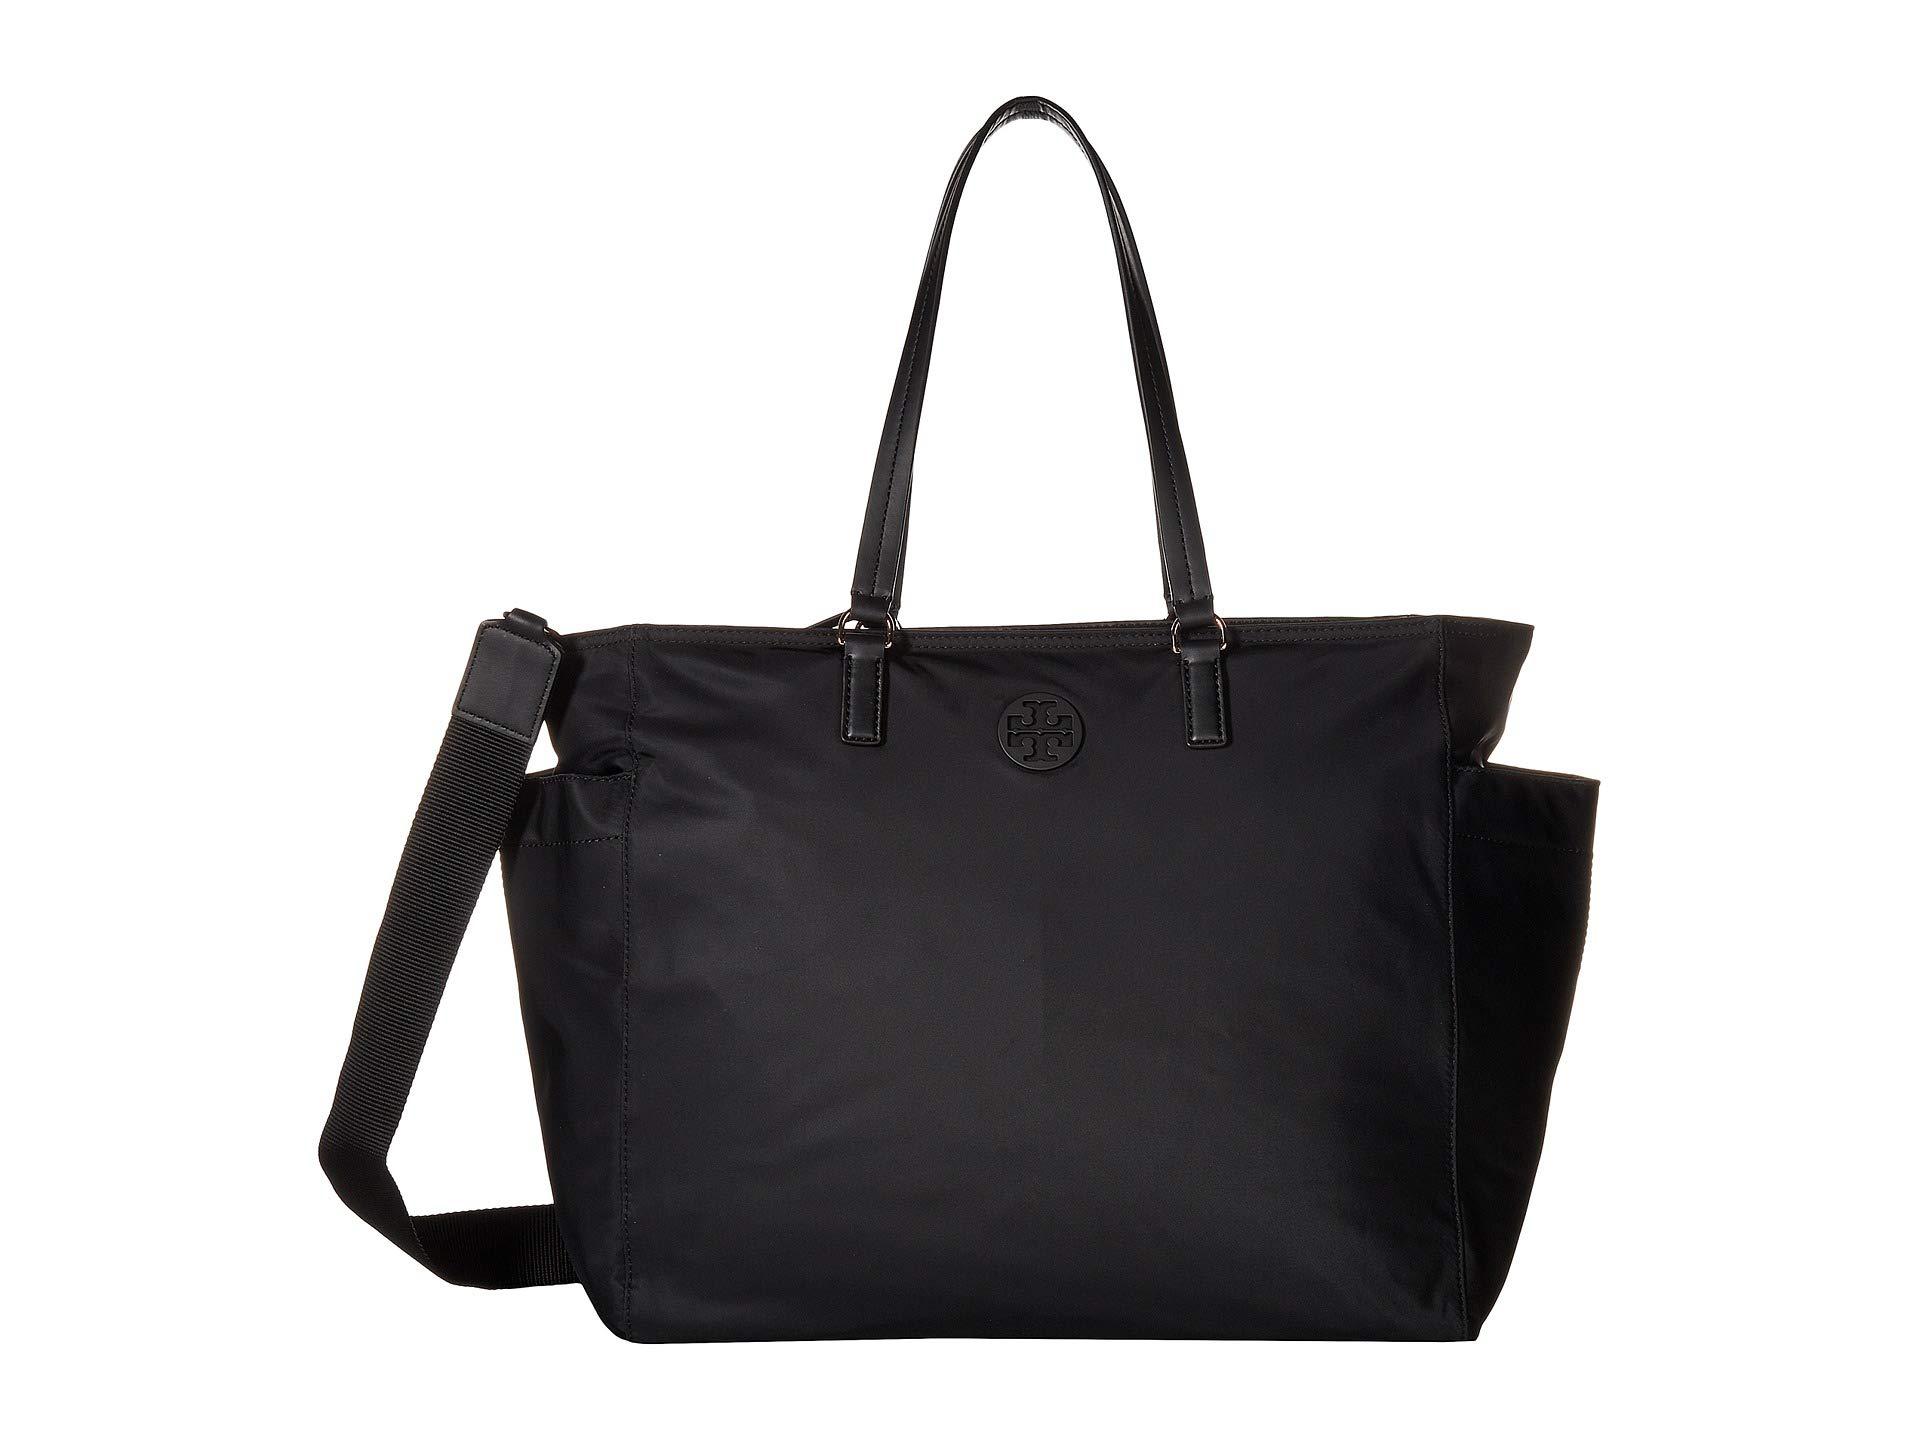 Tory Burch Tilda Nylon Baby Bag (black) Diaper Bags in Black - Lyst